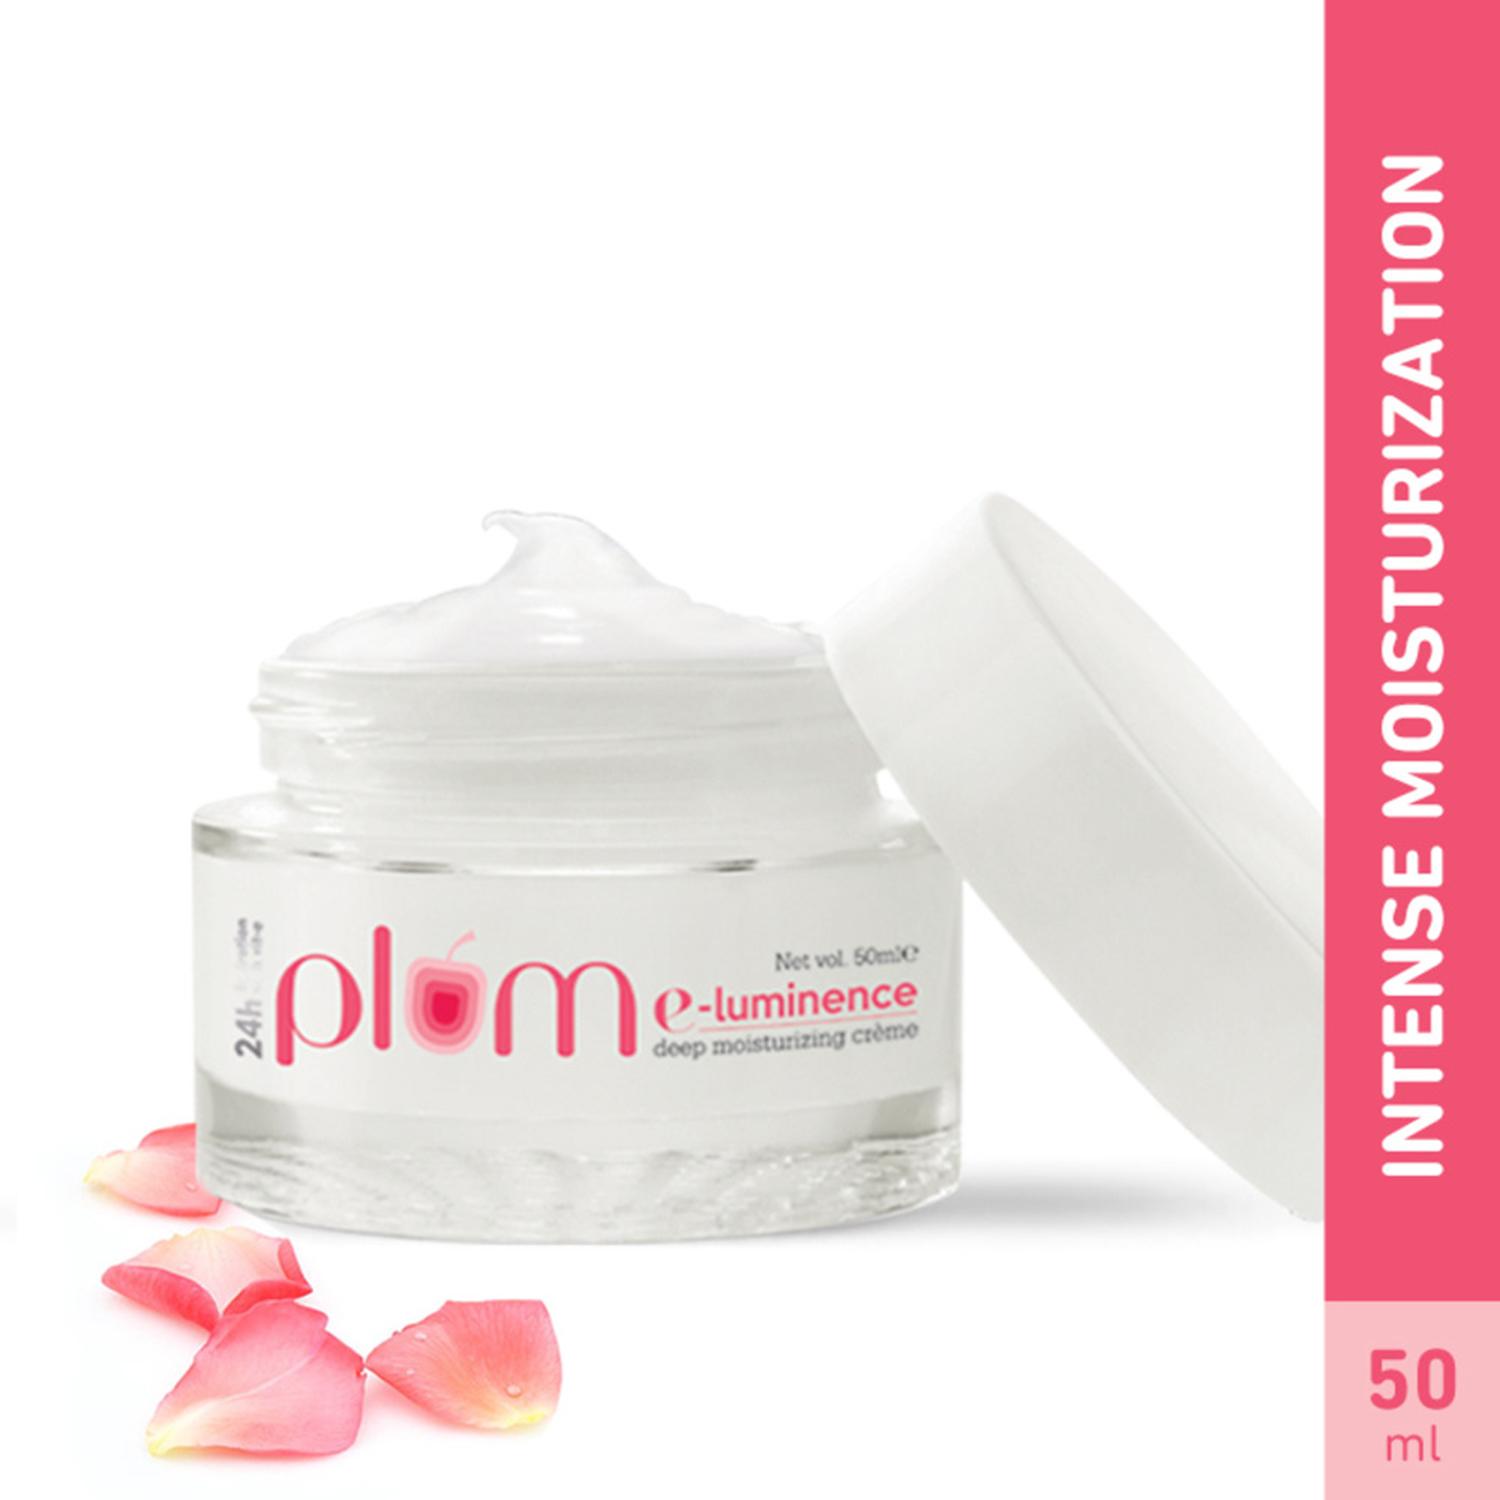 Plum E-Luminence Deep Moisturizing Crème With Vitamin E -Intensely Nourishes Dry & Flaky Skin (50g)